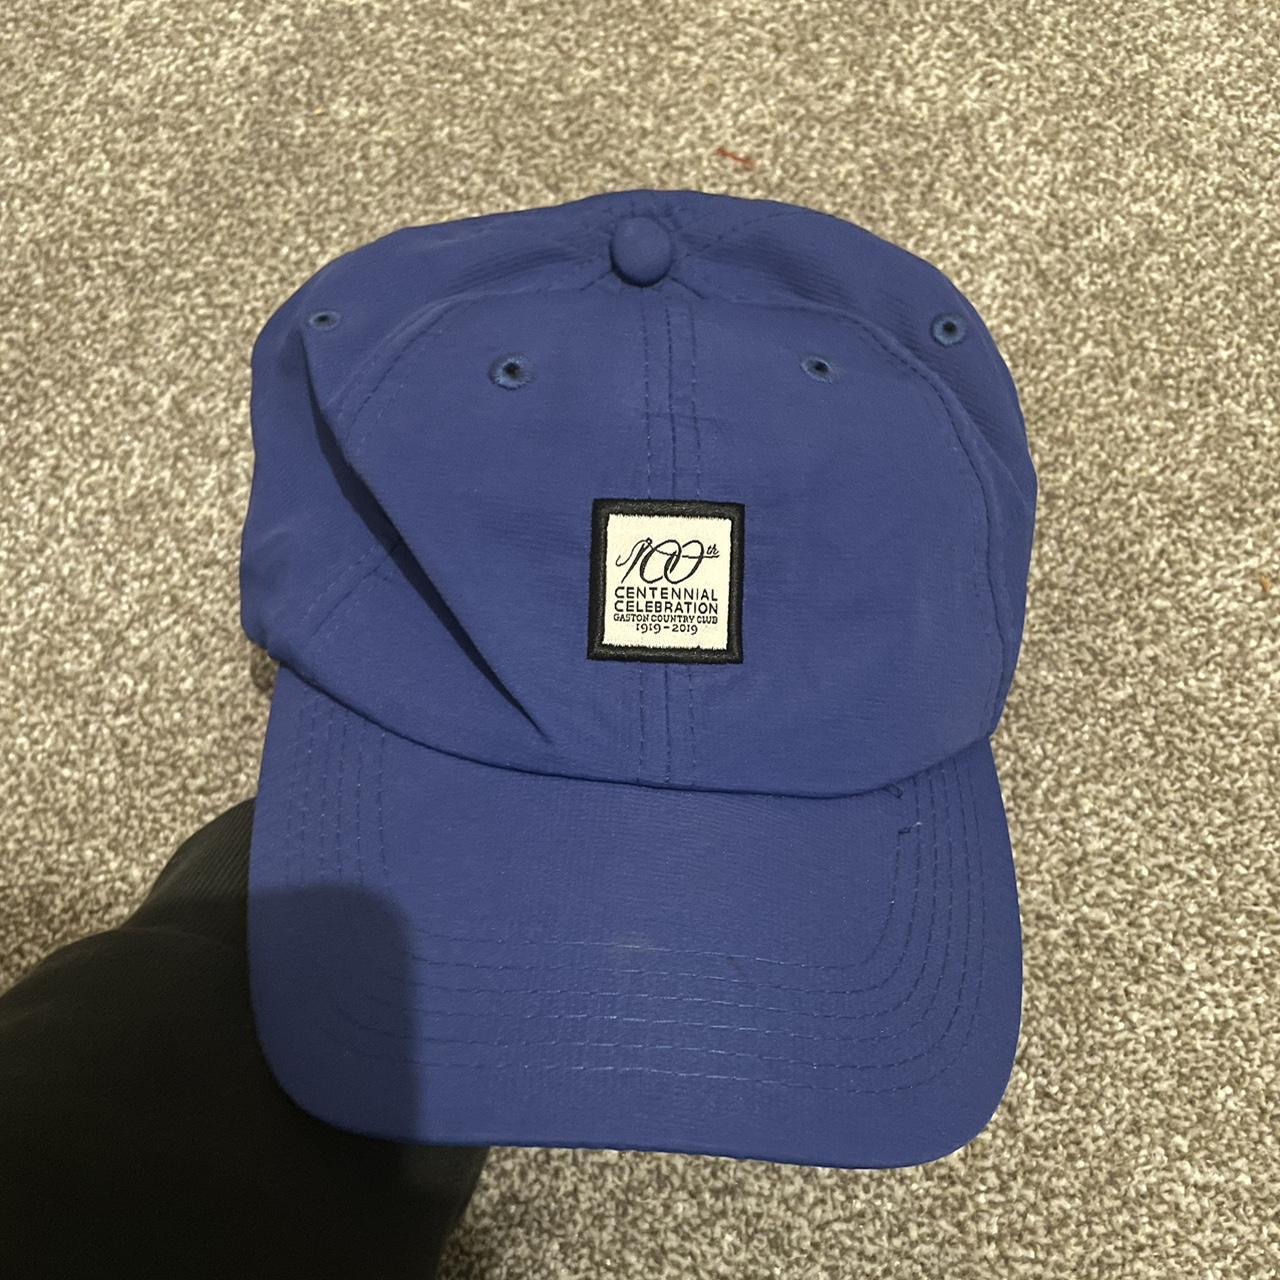 Imperial 100th celebration golf cap (one size) - Depop